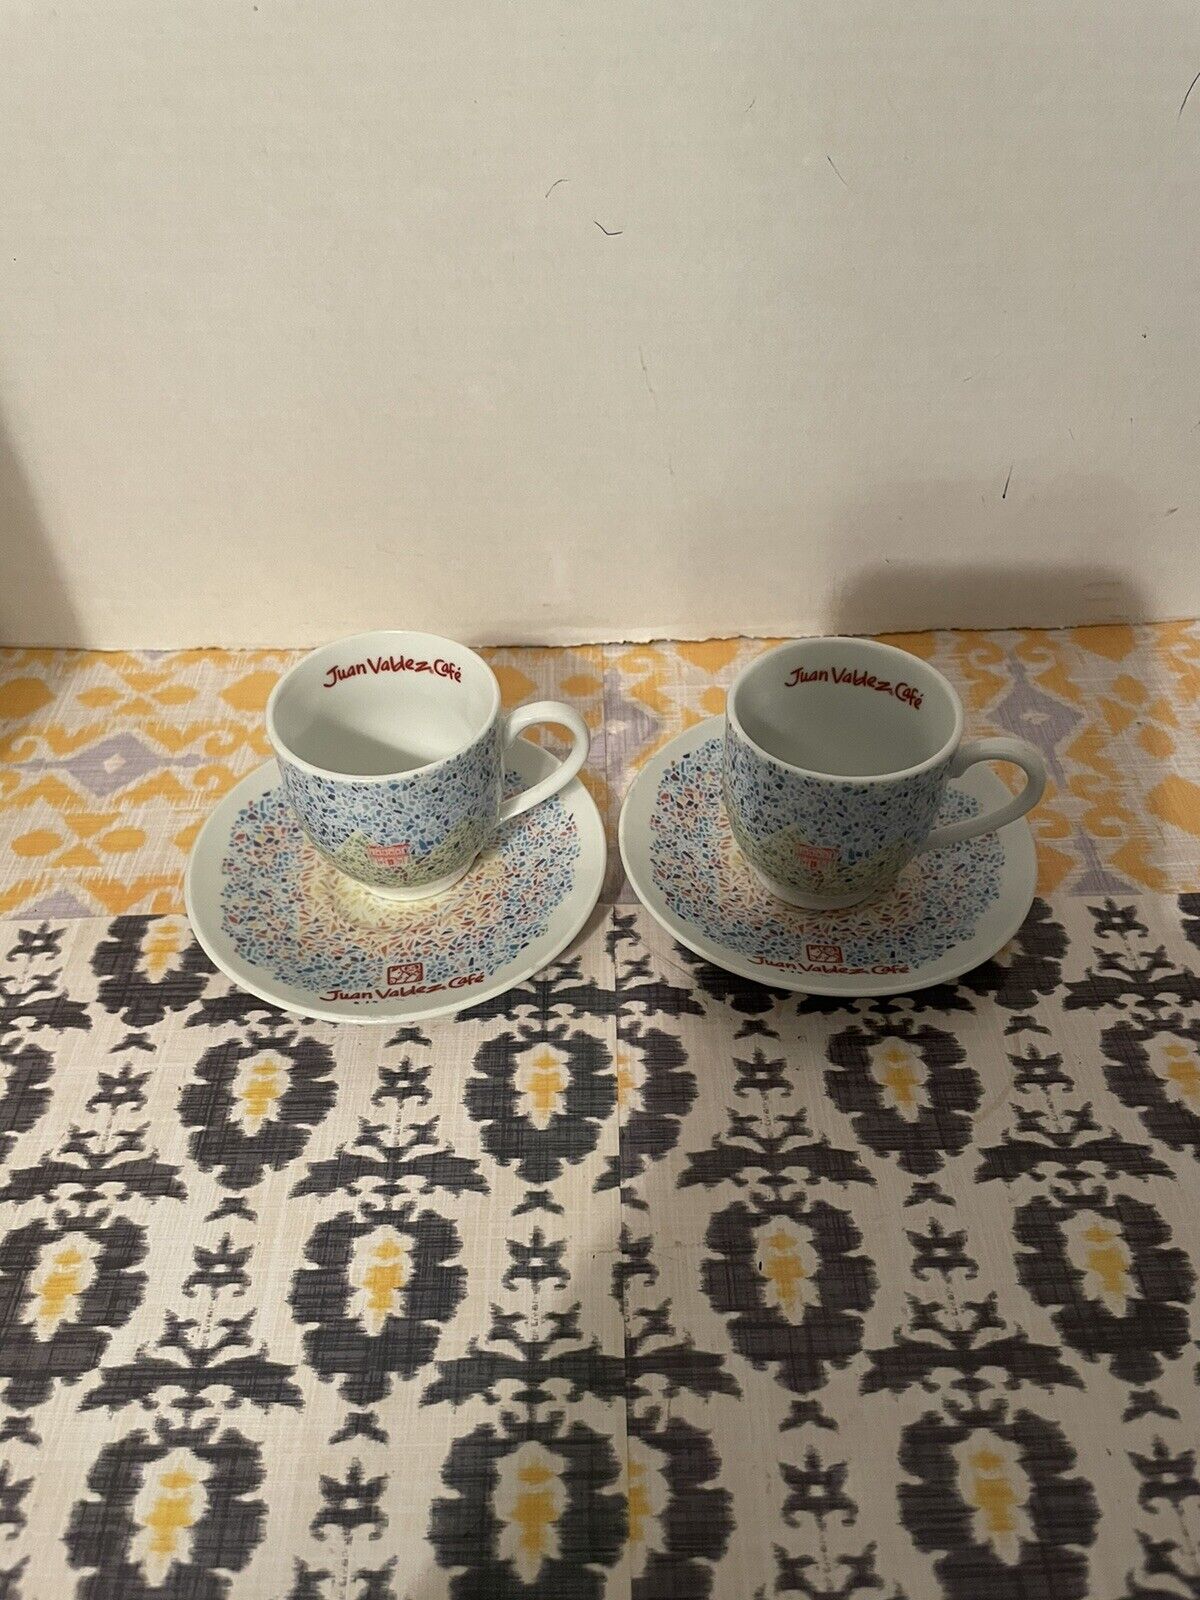 Juan Valdez Cafe set of 2 demi cups and saucers confetti pattern